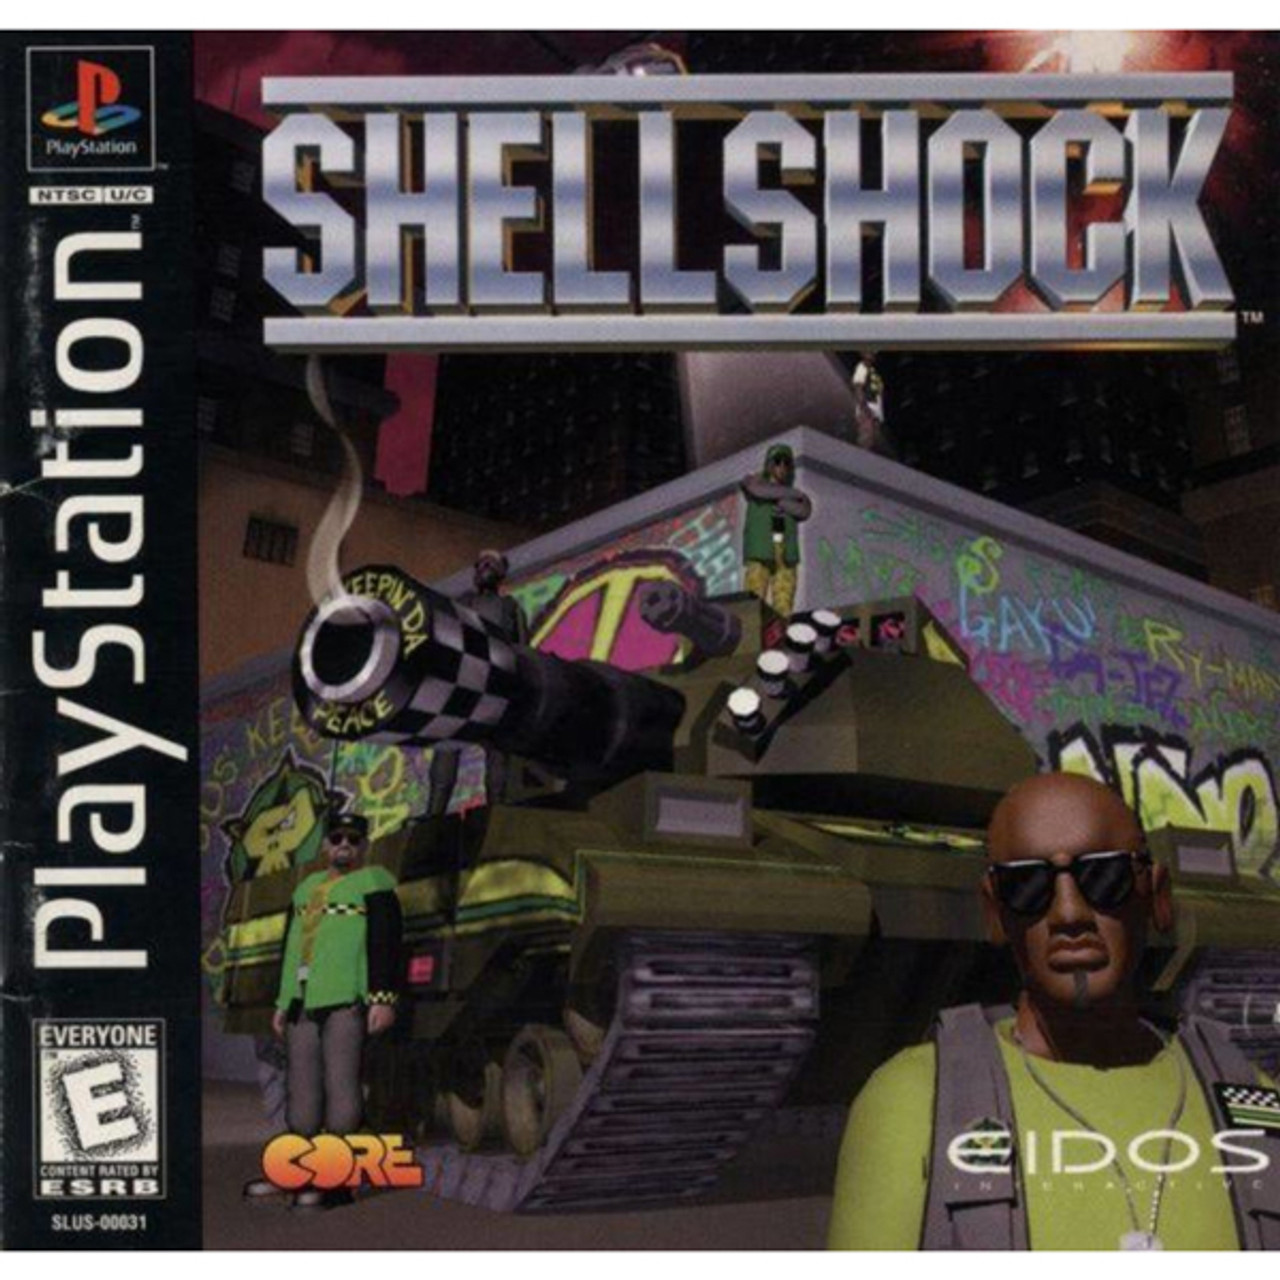 Shellshock Videos for PlayStation - GameFAQs